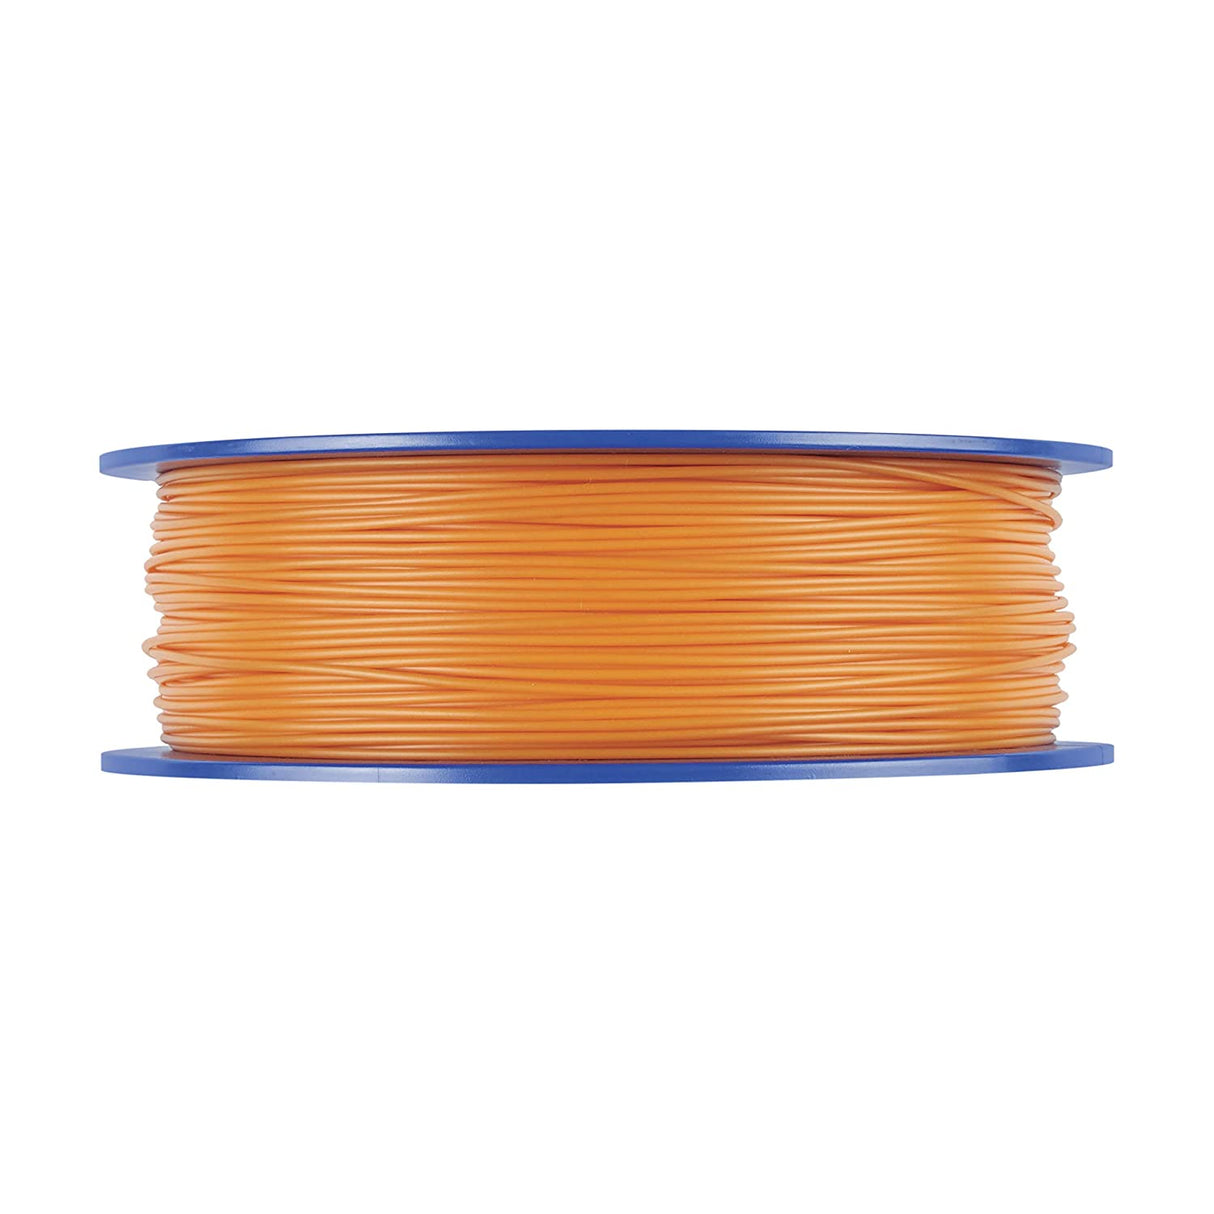 Dremel DigiLab PLA-ORA-01 3D Printer Filament, 1.75 mm Diameter, 0.75 kg Spool Weight, Color Orange, RFID Enabled, New Formula and 50 Percent More per Spool